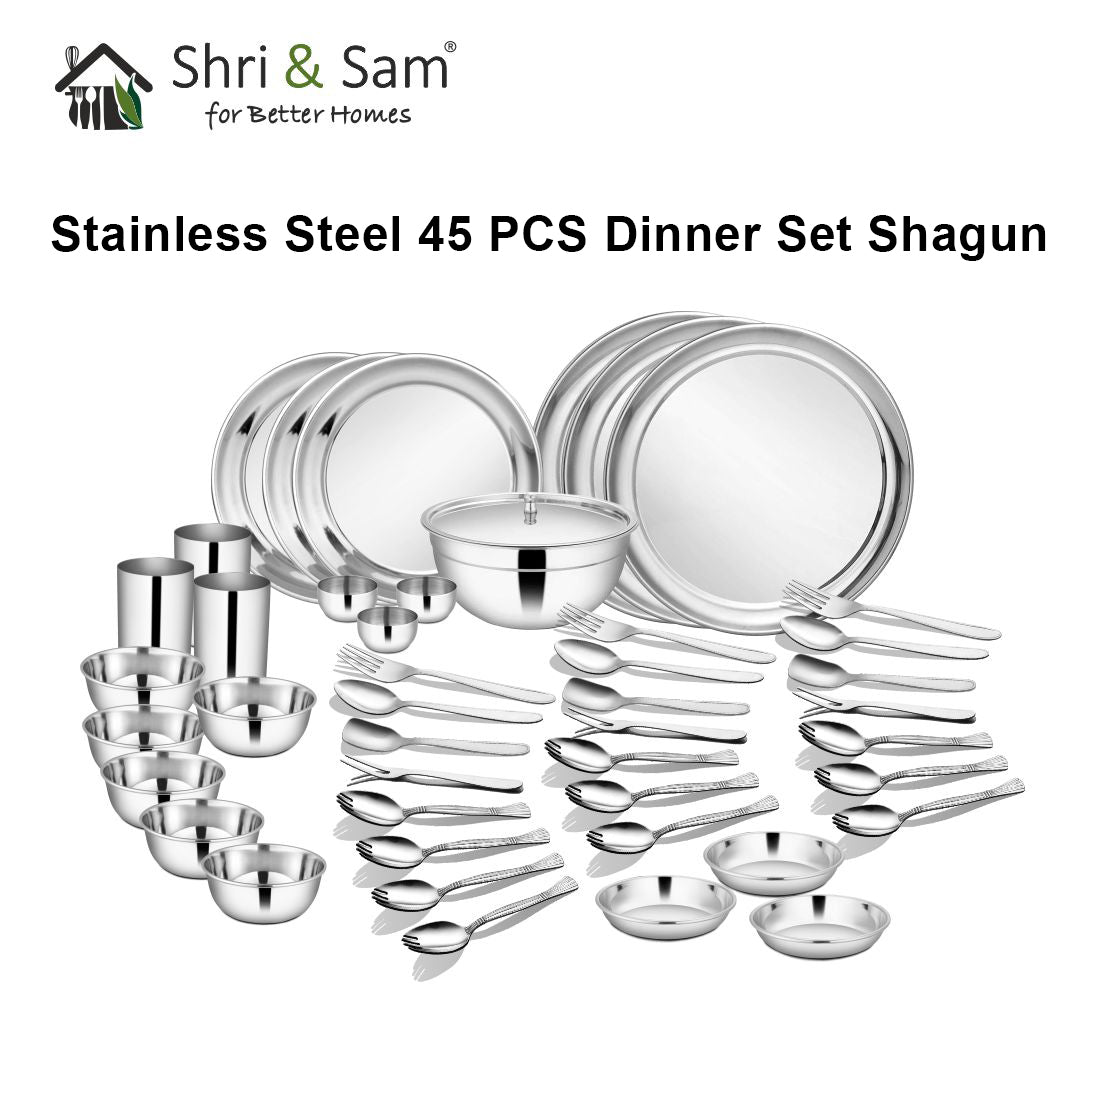 Stainless Steel 45 PCS Dinner Set (3 People) Shagun